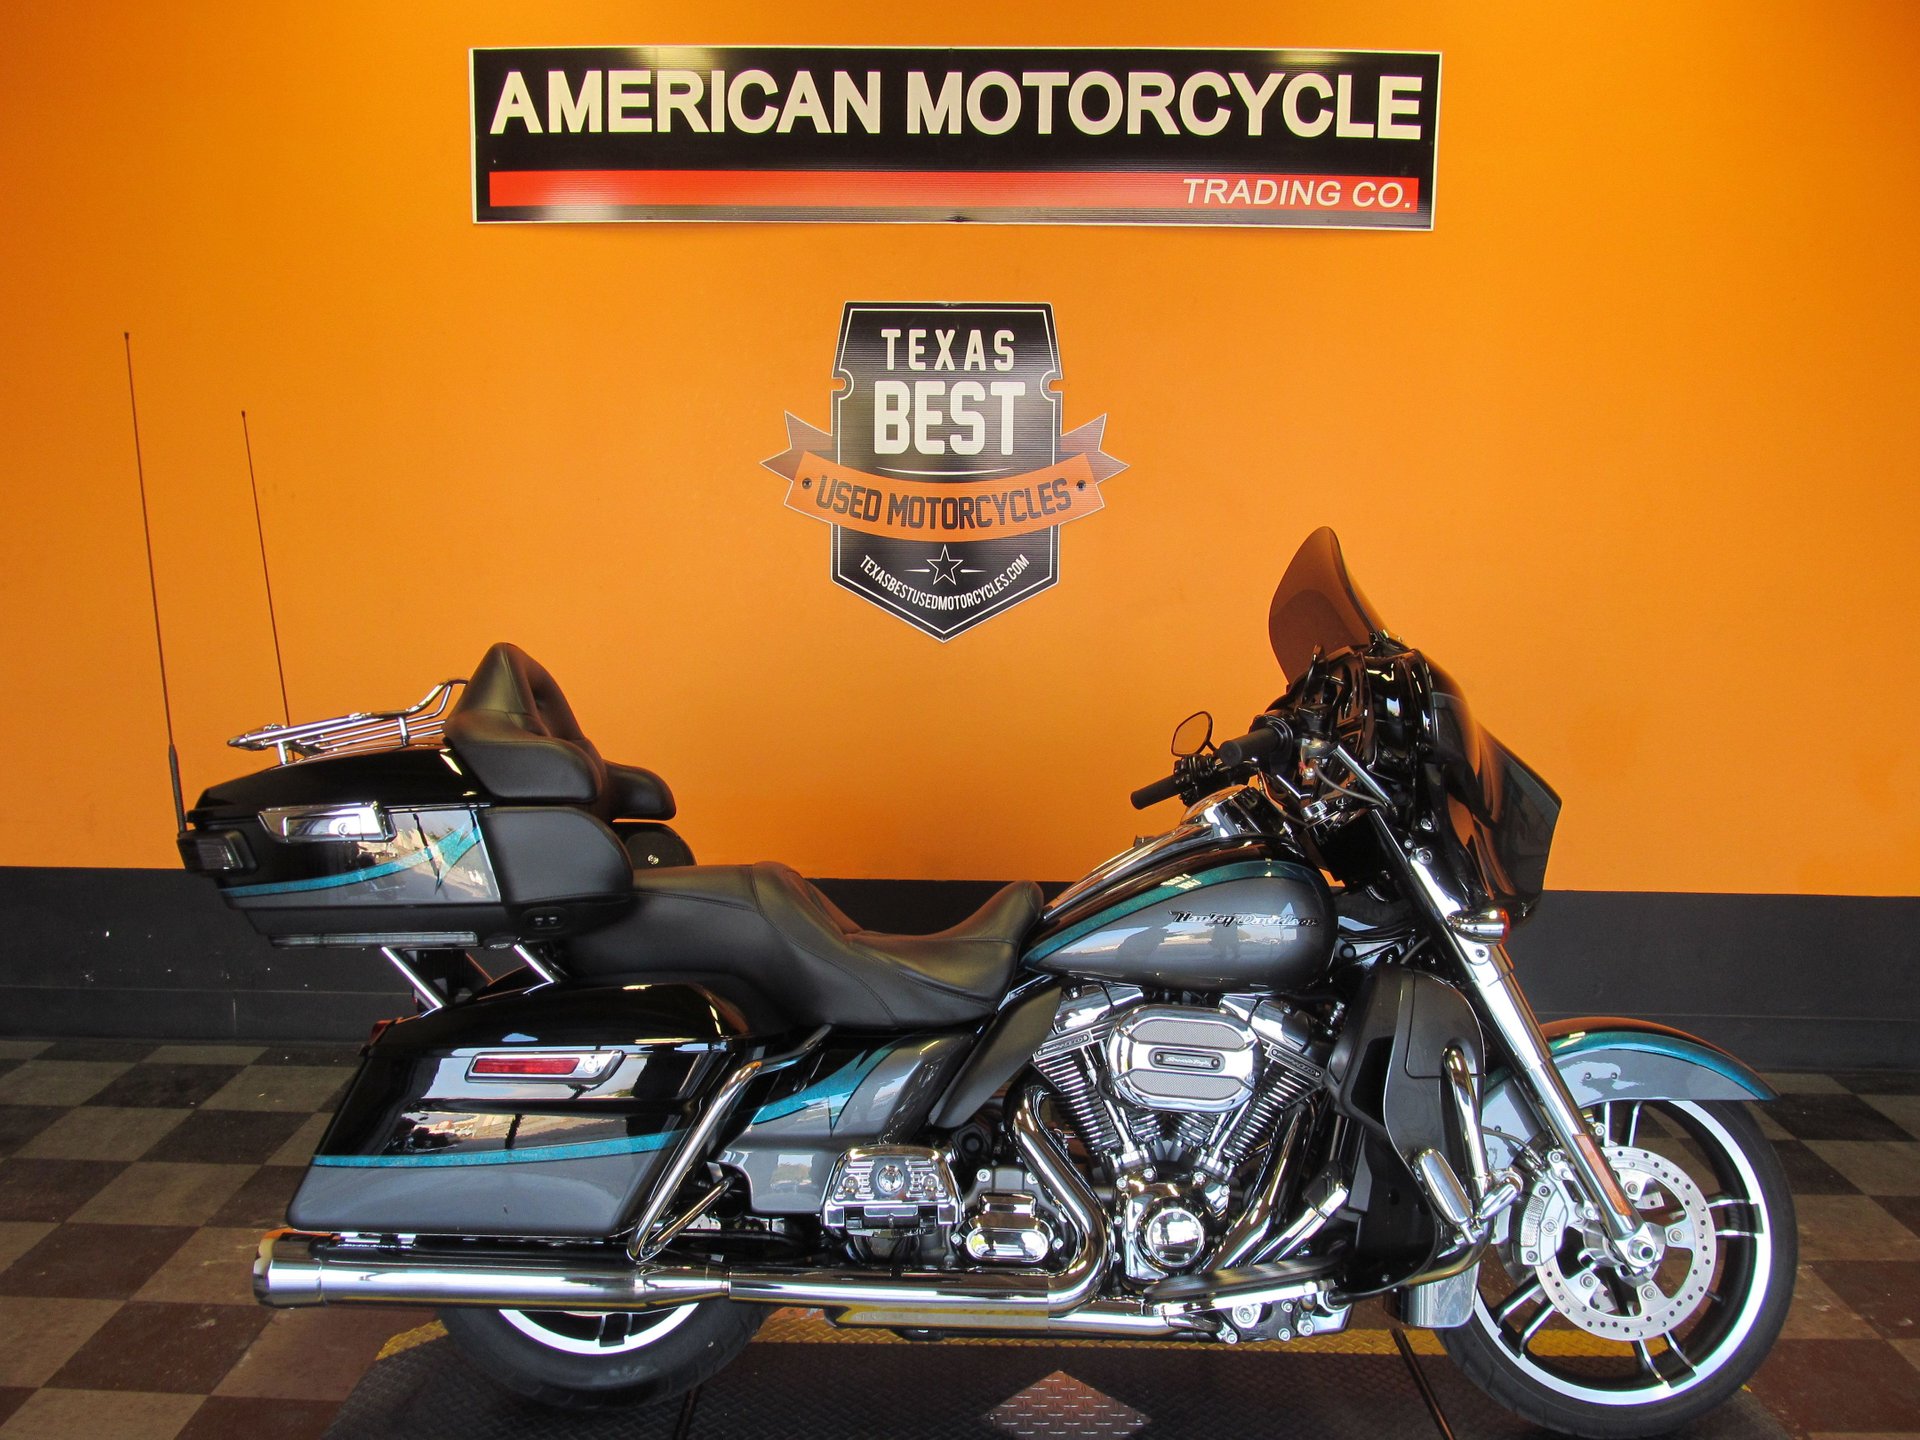 2015 Harley Davidson Cvo Ultra Limited American Motorcycle Trading Company Used Harley Davidson Motorcycles